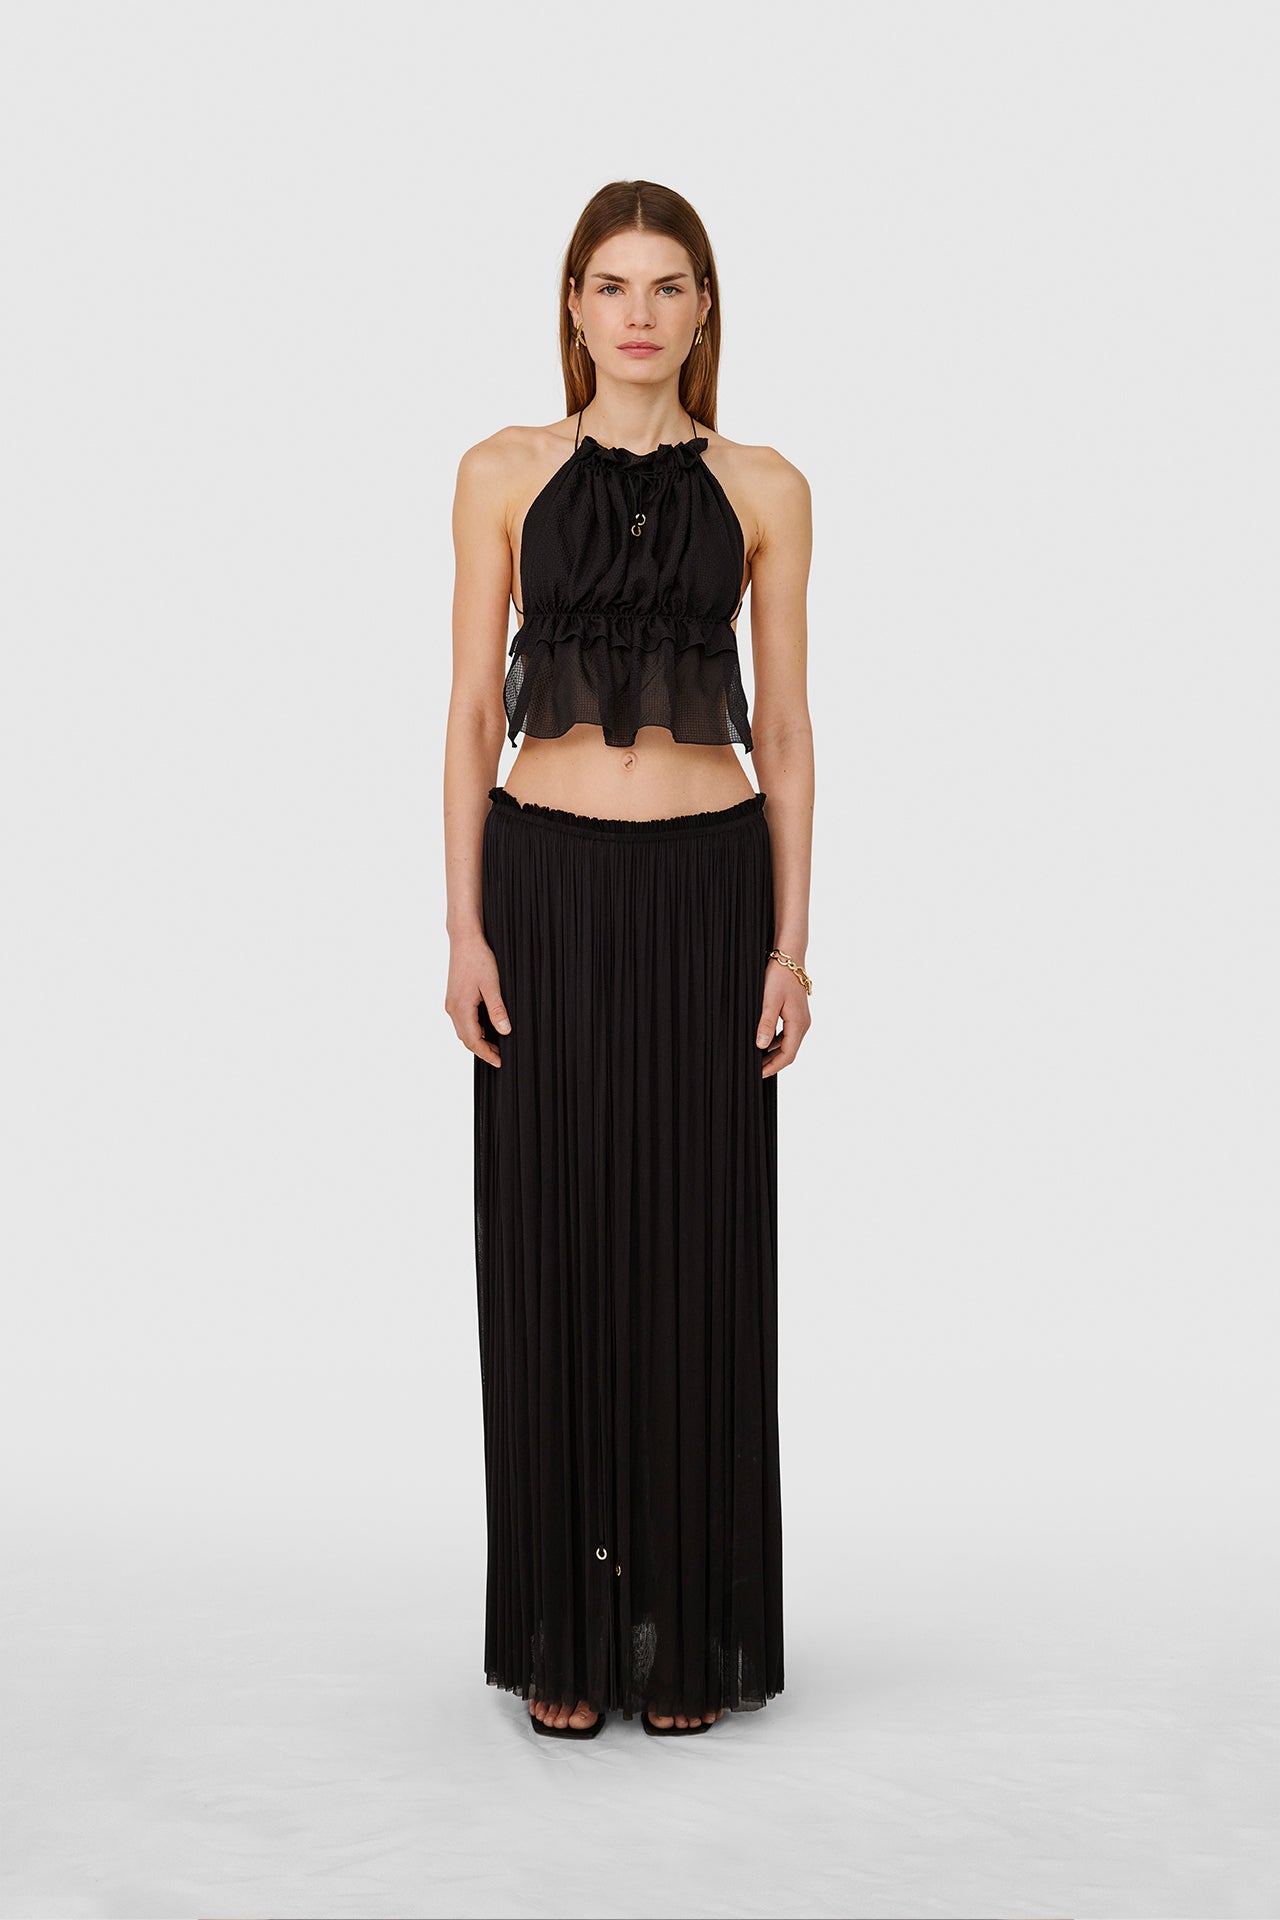 Black Silk Skirt & String Top